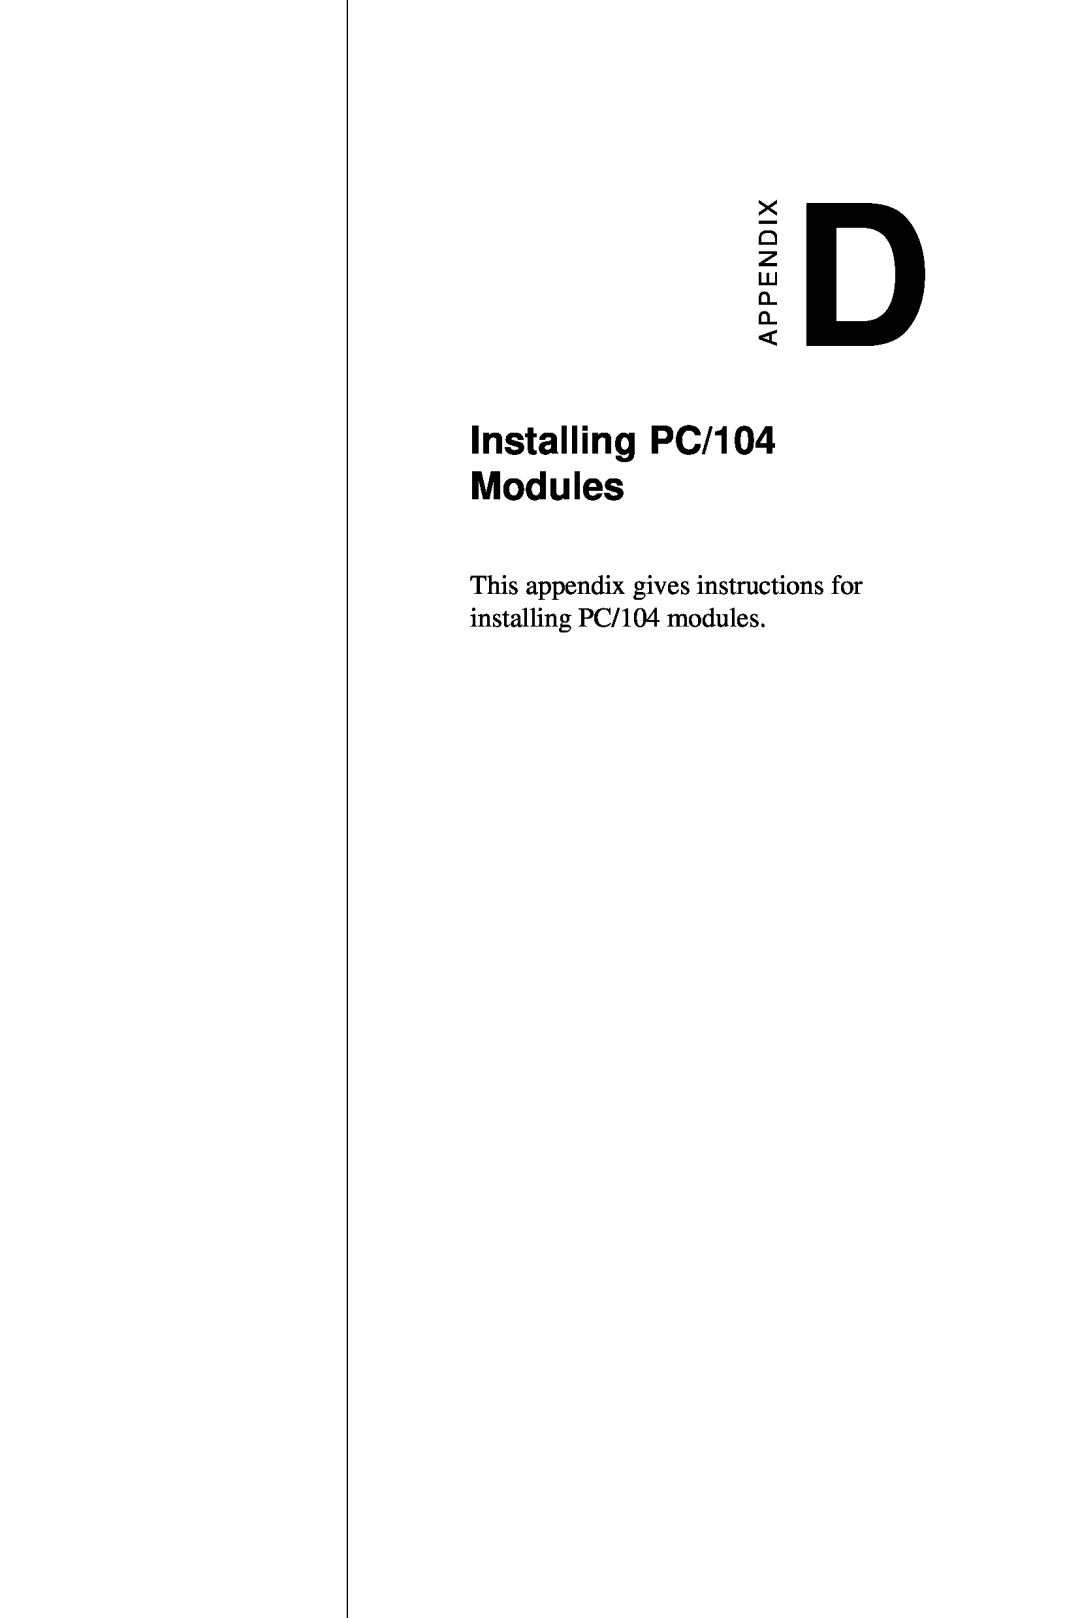 AMD PCM-5820 manual Installing PC/104 Modules 